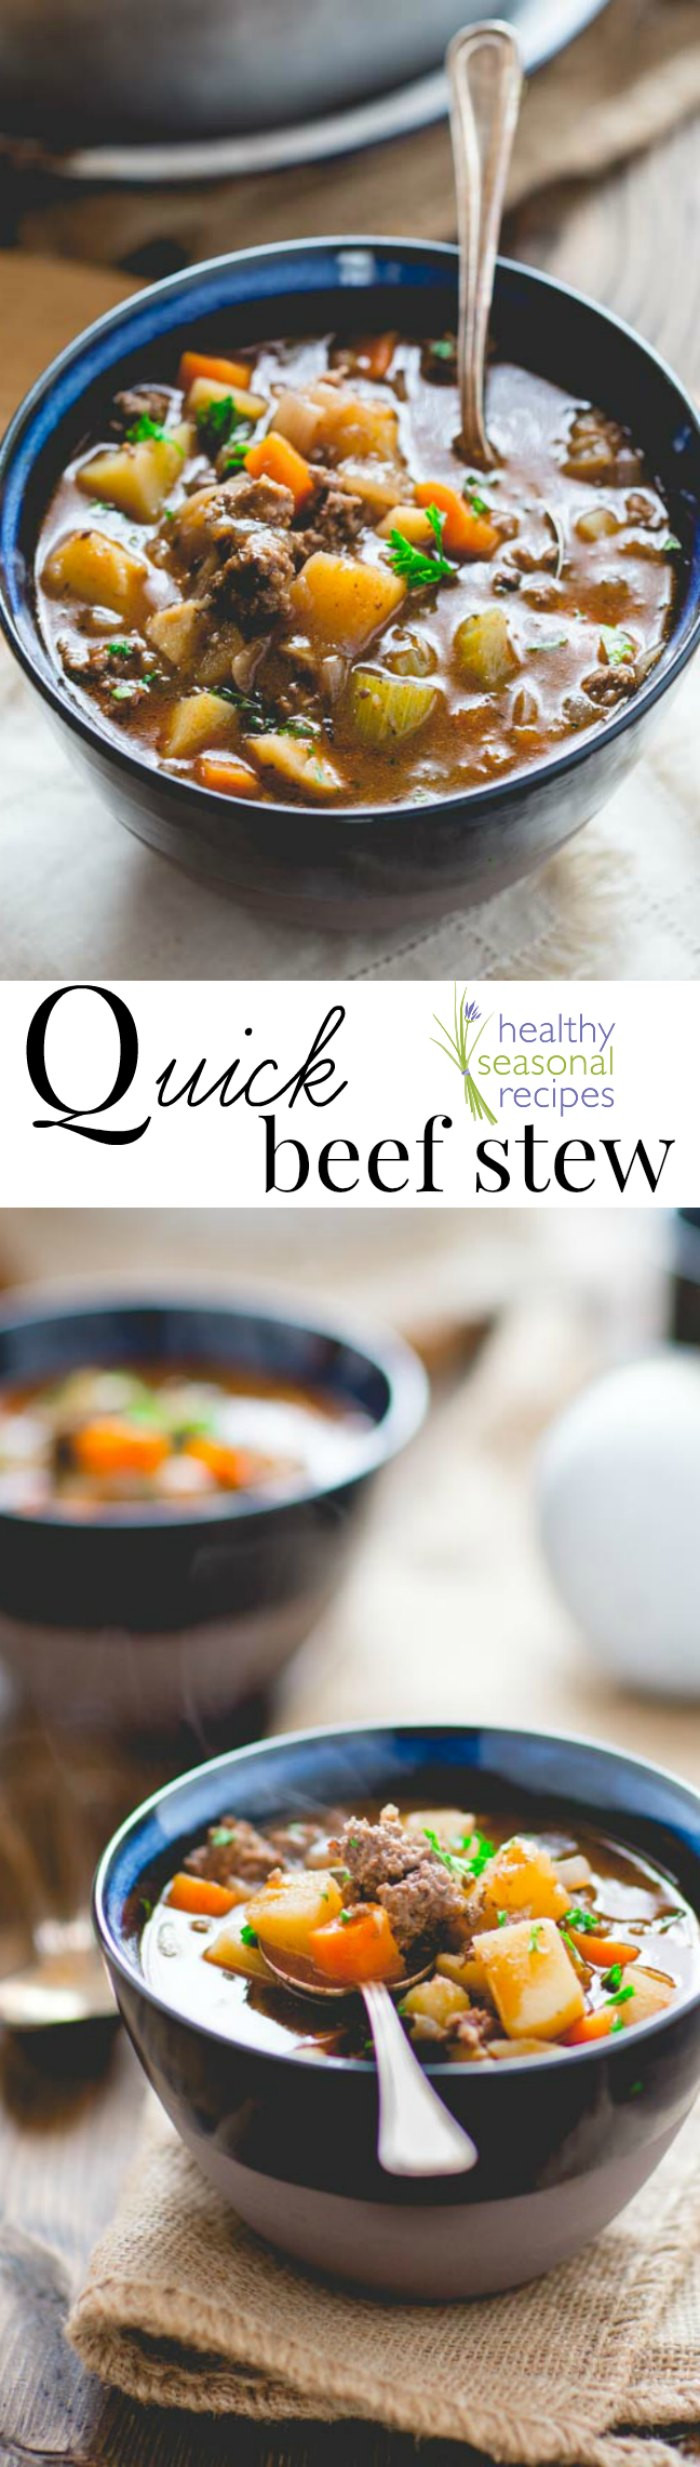 Heart Healthy Beef Recipes
 heart healthy beef stew slow cooker